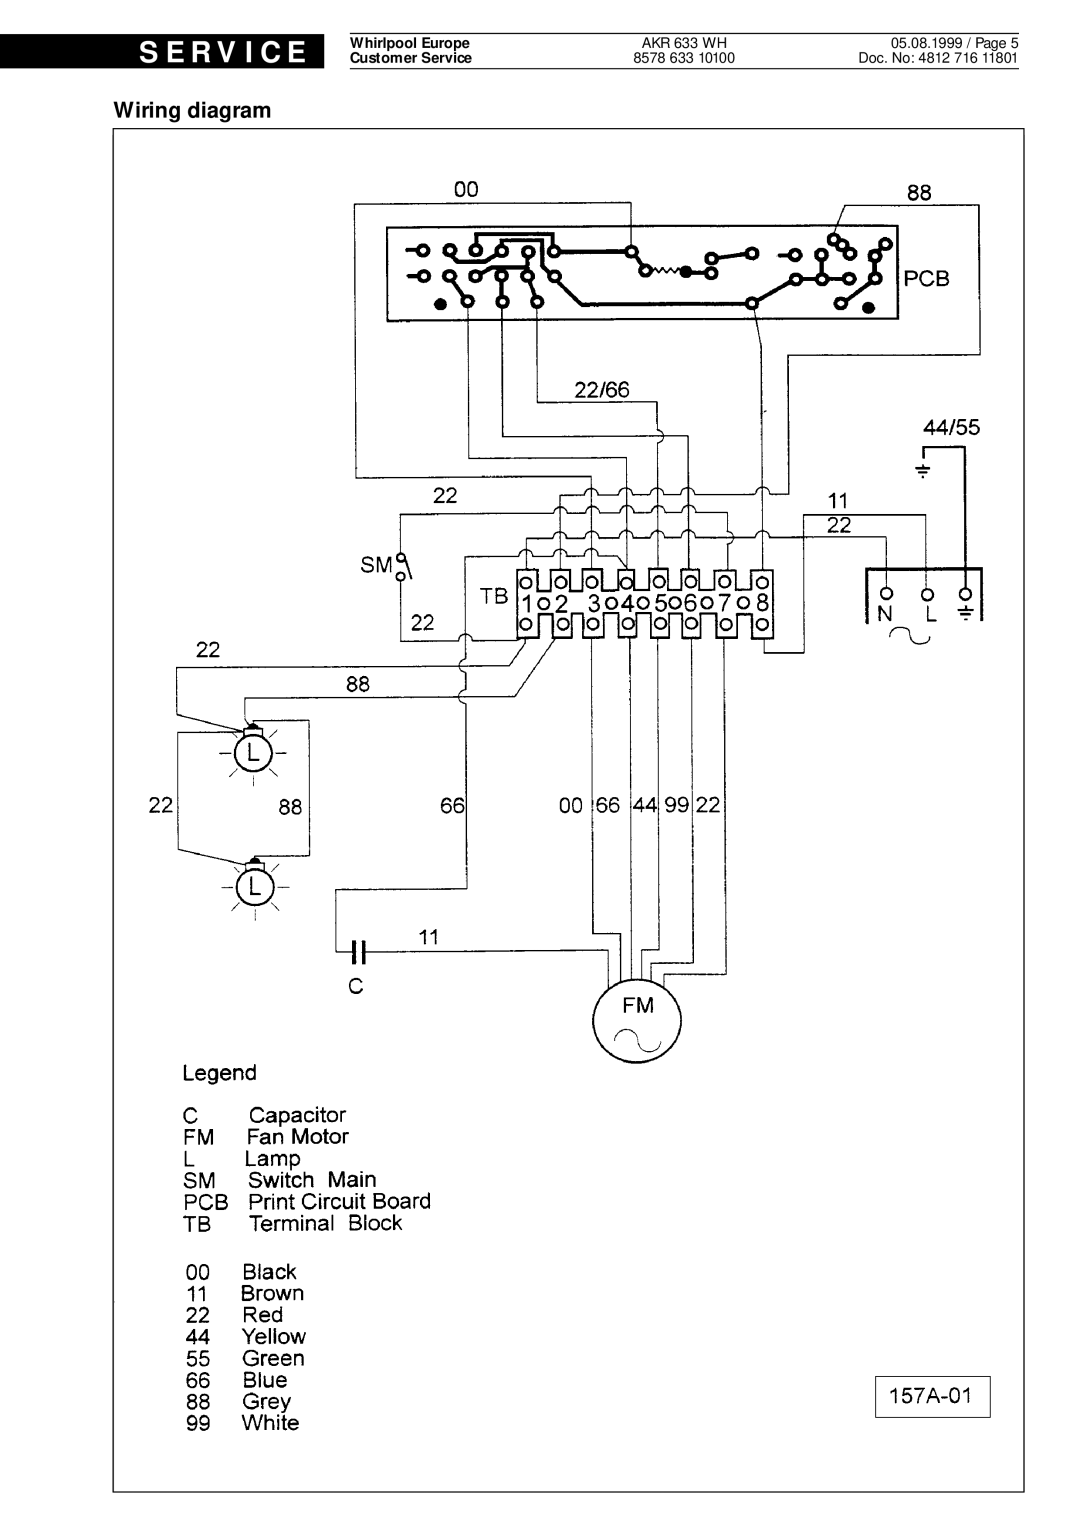 Whirlpool AKR 633 WH service manual Wiring diagram, S E R V I C E, Whirlpool Europe, Customer Service, Doc. No 